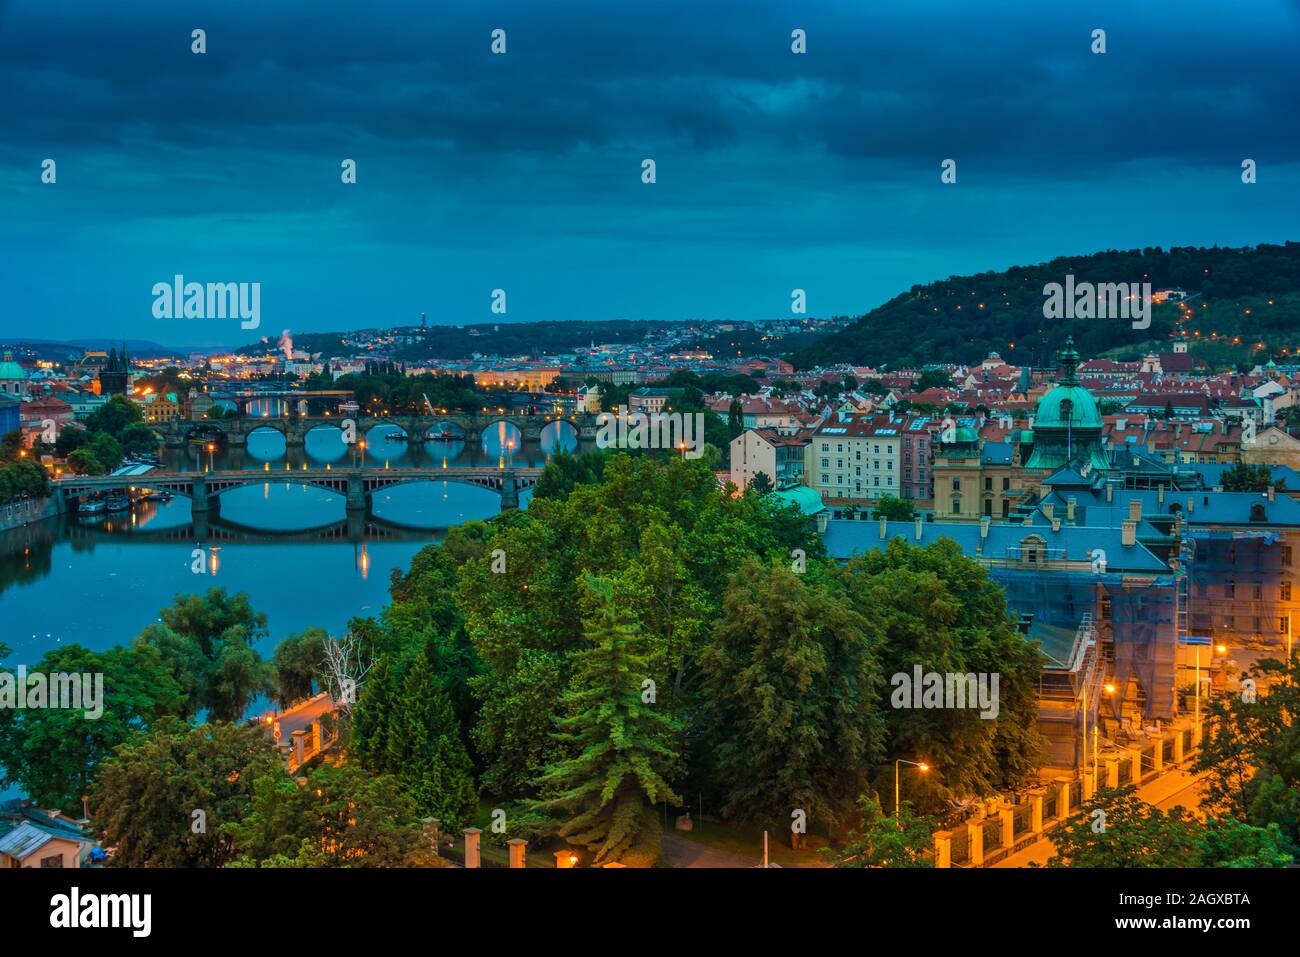 Bridges over the River Vltava in Prague, Czech Republic Stock Photo